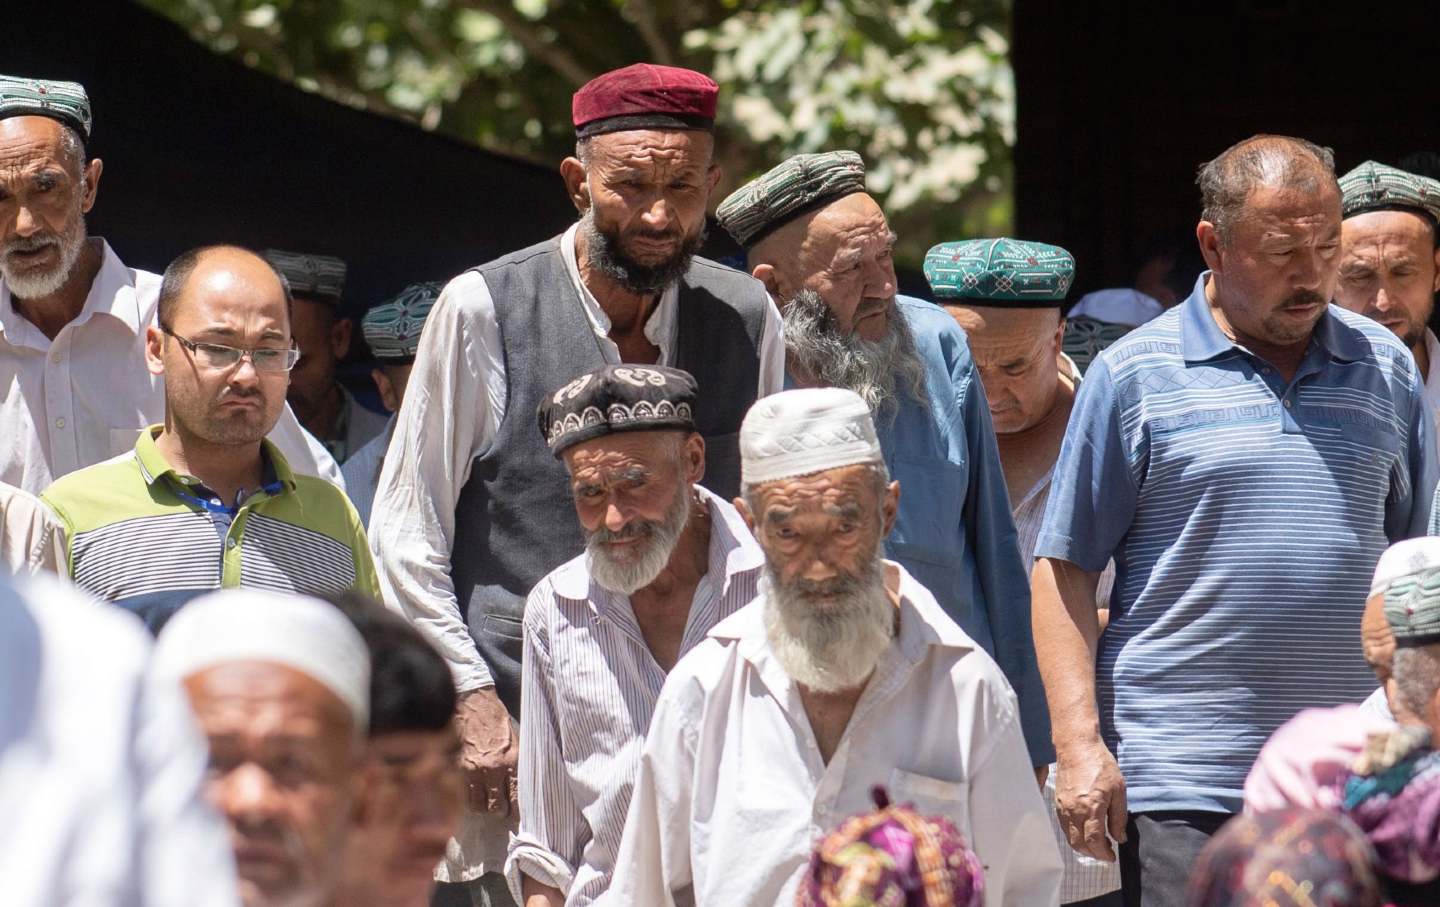 Muslim men after prayer